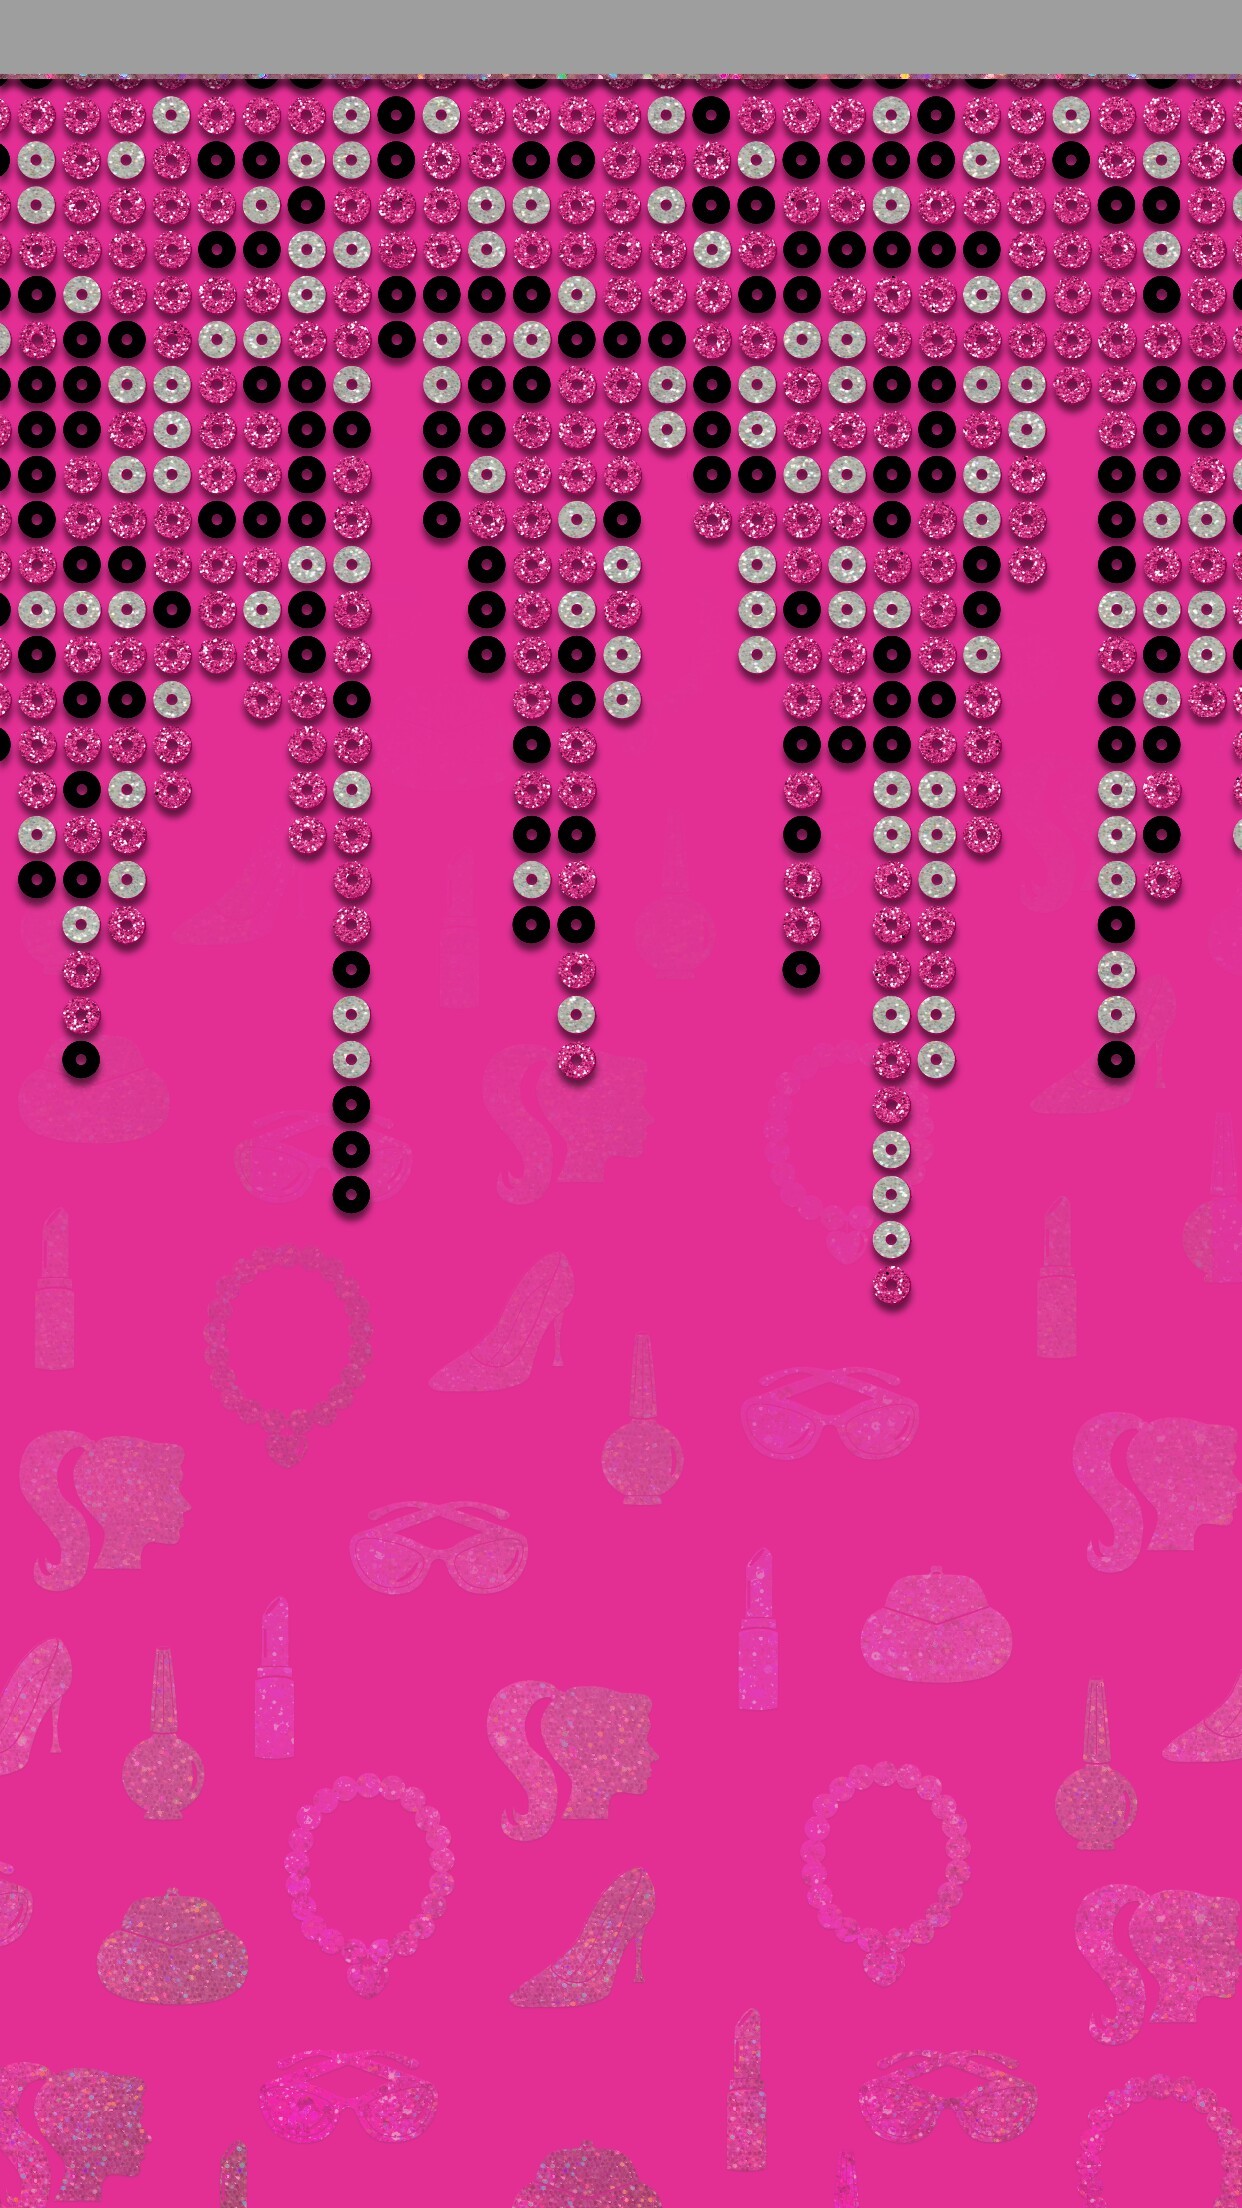 1242x2208 Pink Wallpaper, Hello Kitty Wallpaper, Phone Backgrounds, Wallpaper  Backgrounds, Desktop Wallpapers, Iphone 3, Powder Pink, Designer Wallpaper,  Hot Pink